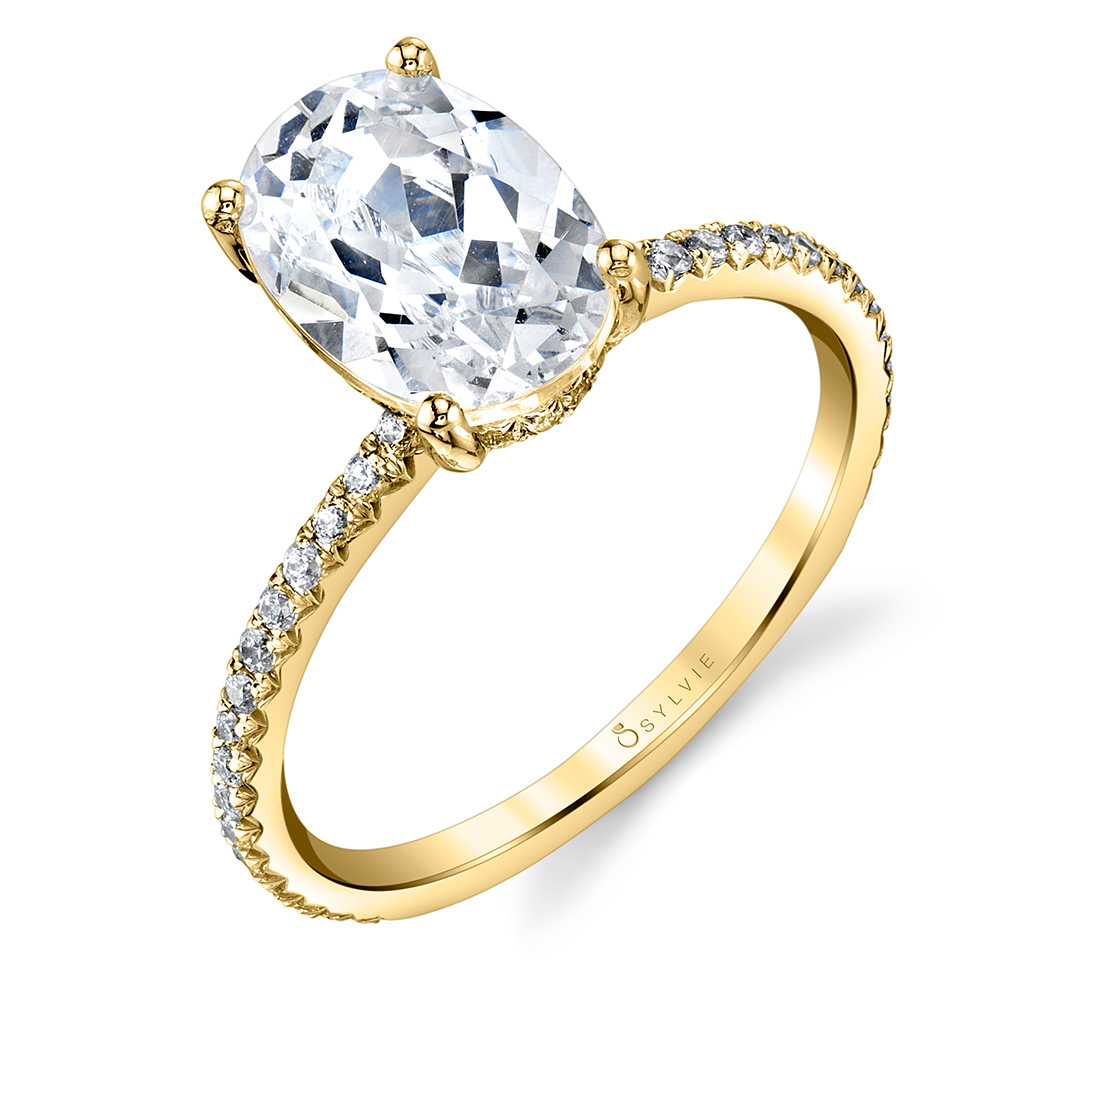 3 carat diamond engagement ring with hidden halo 